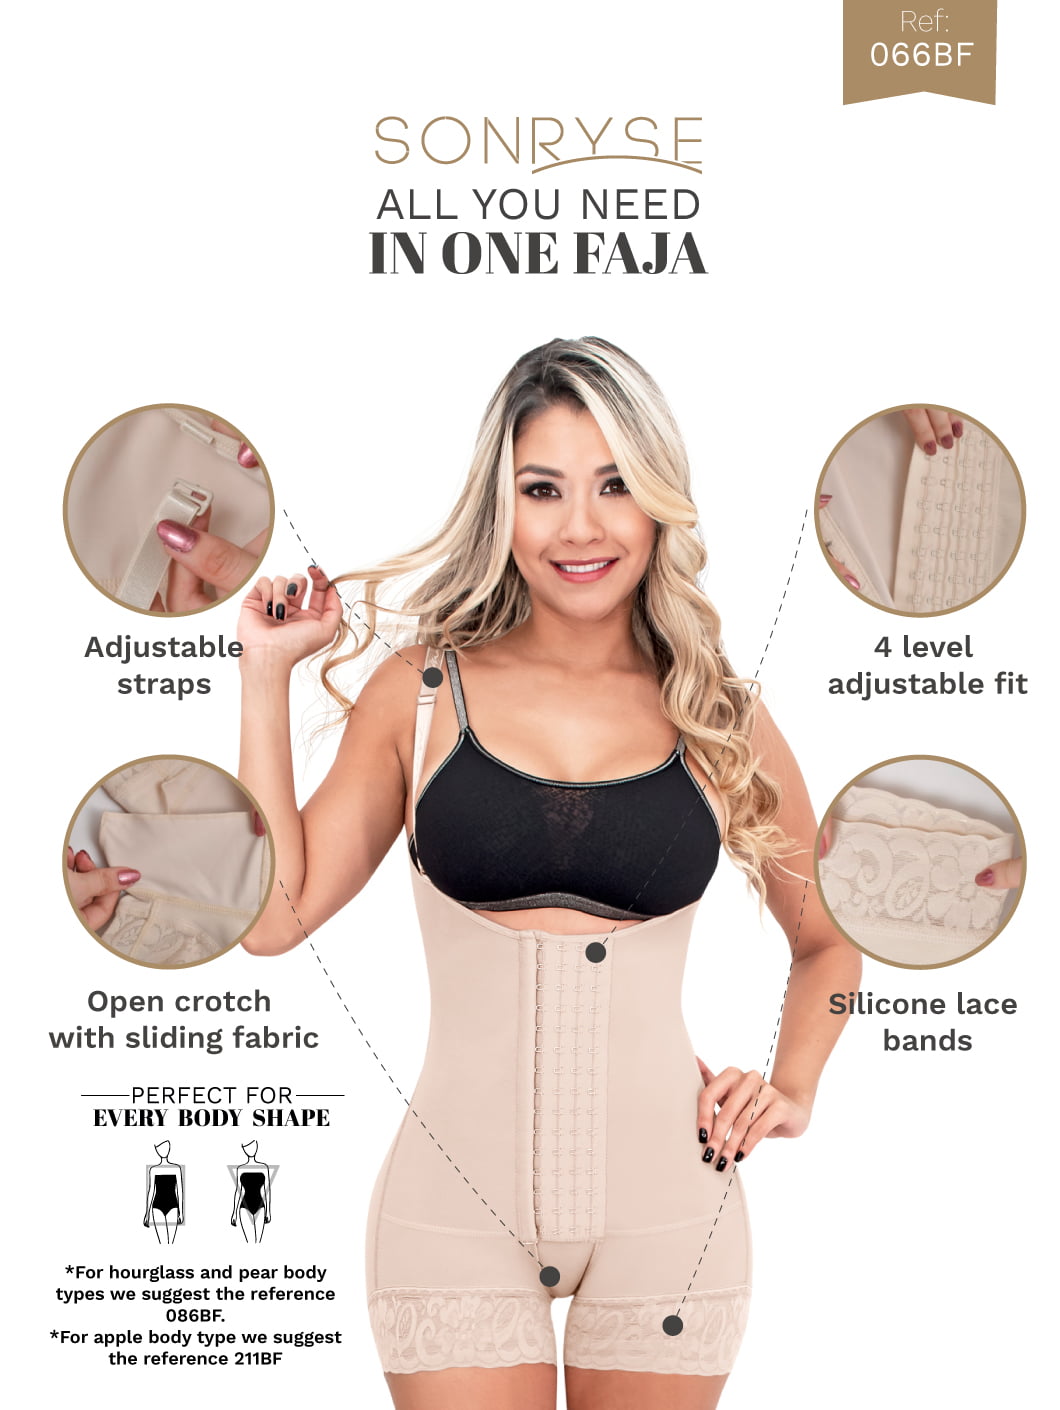 SONRYSE Faja Colombiana Postpartum and Post Surgery Extra Firm